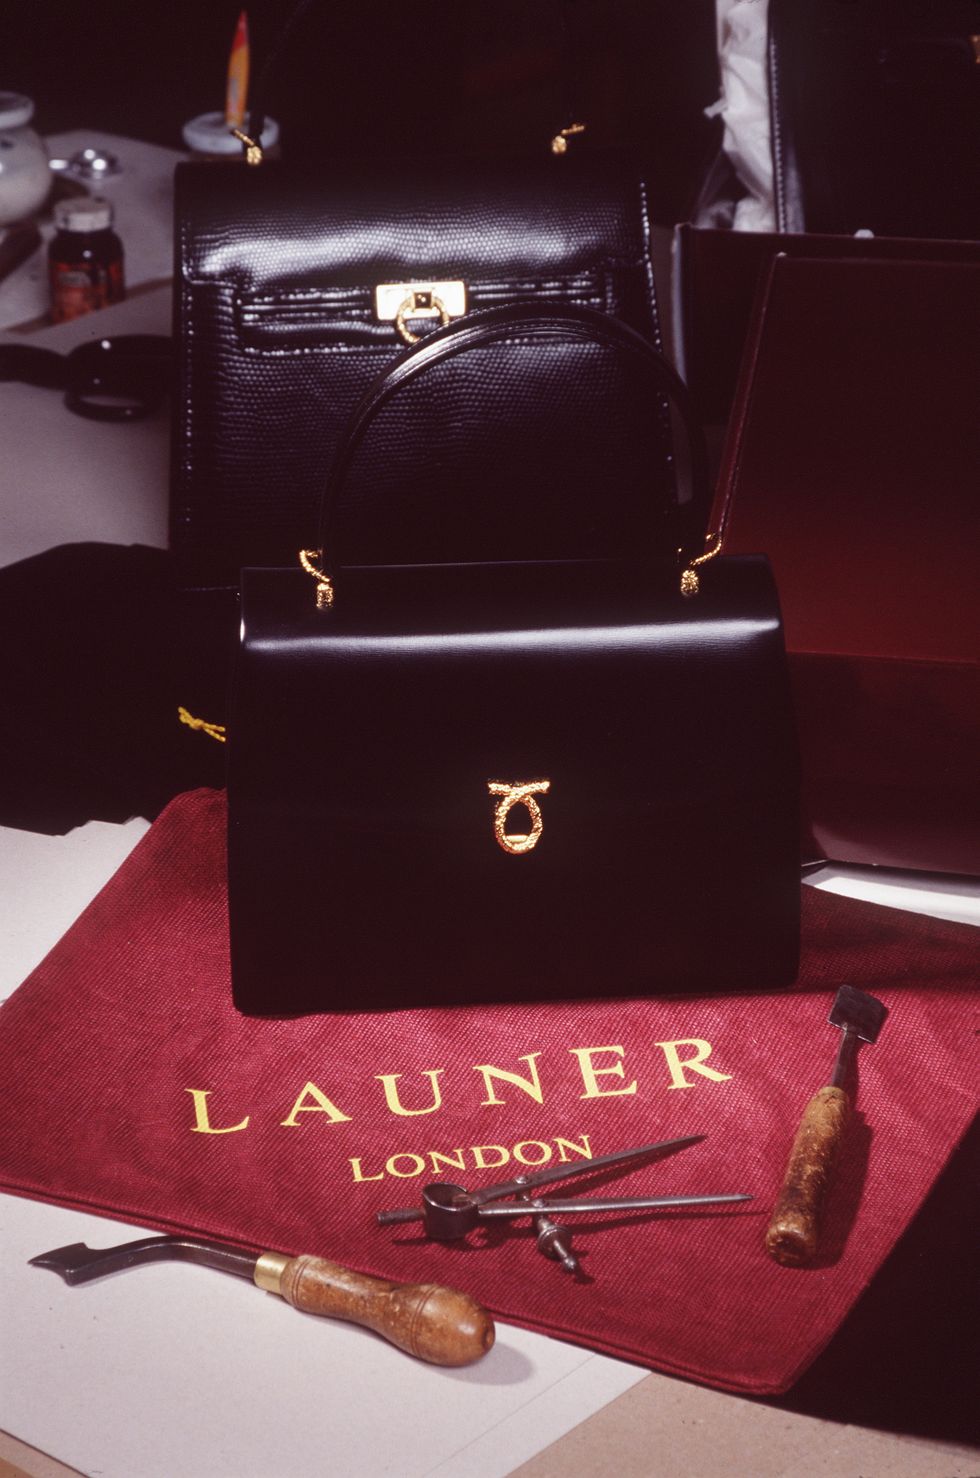 Launer London official store